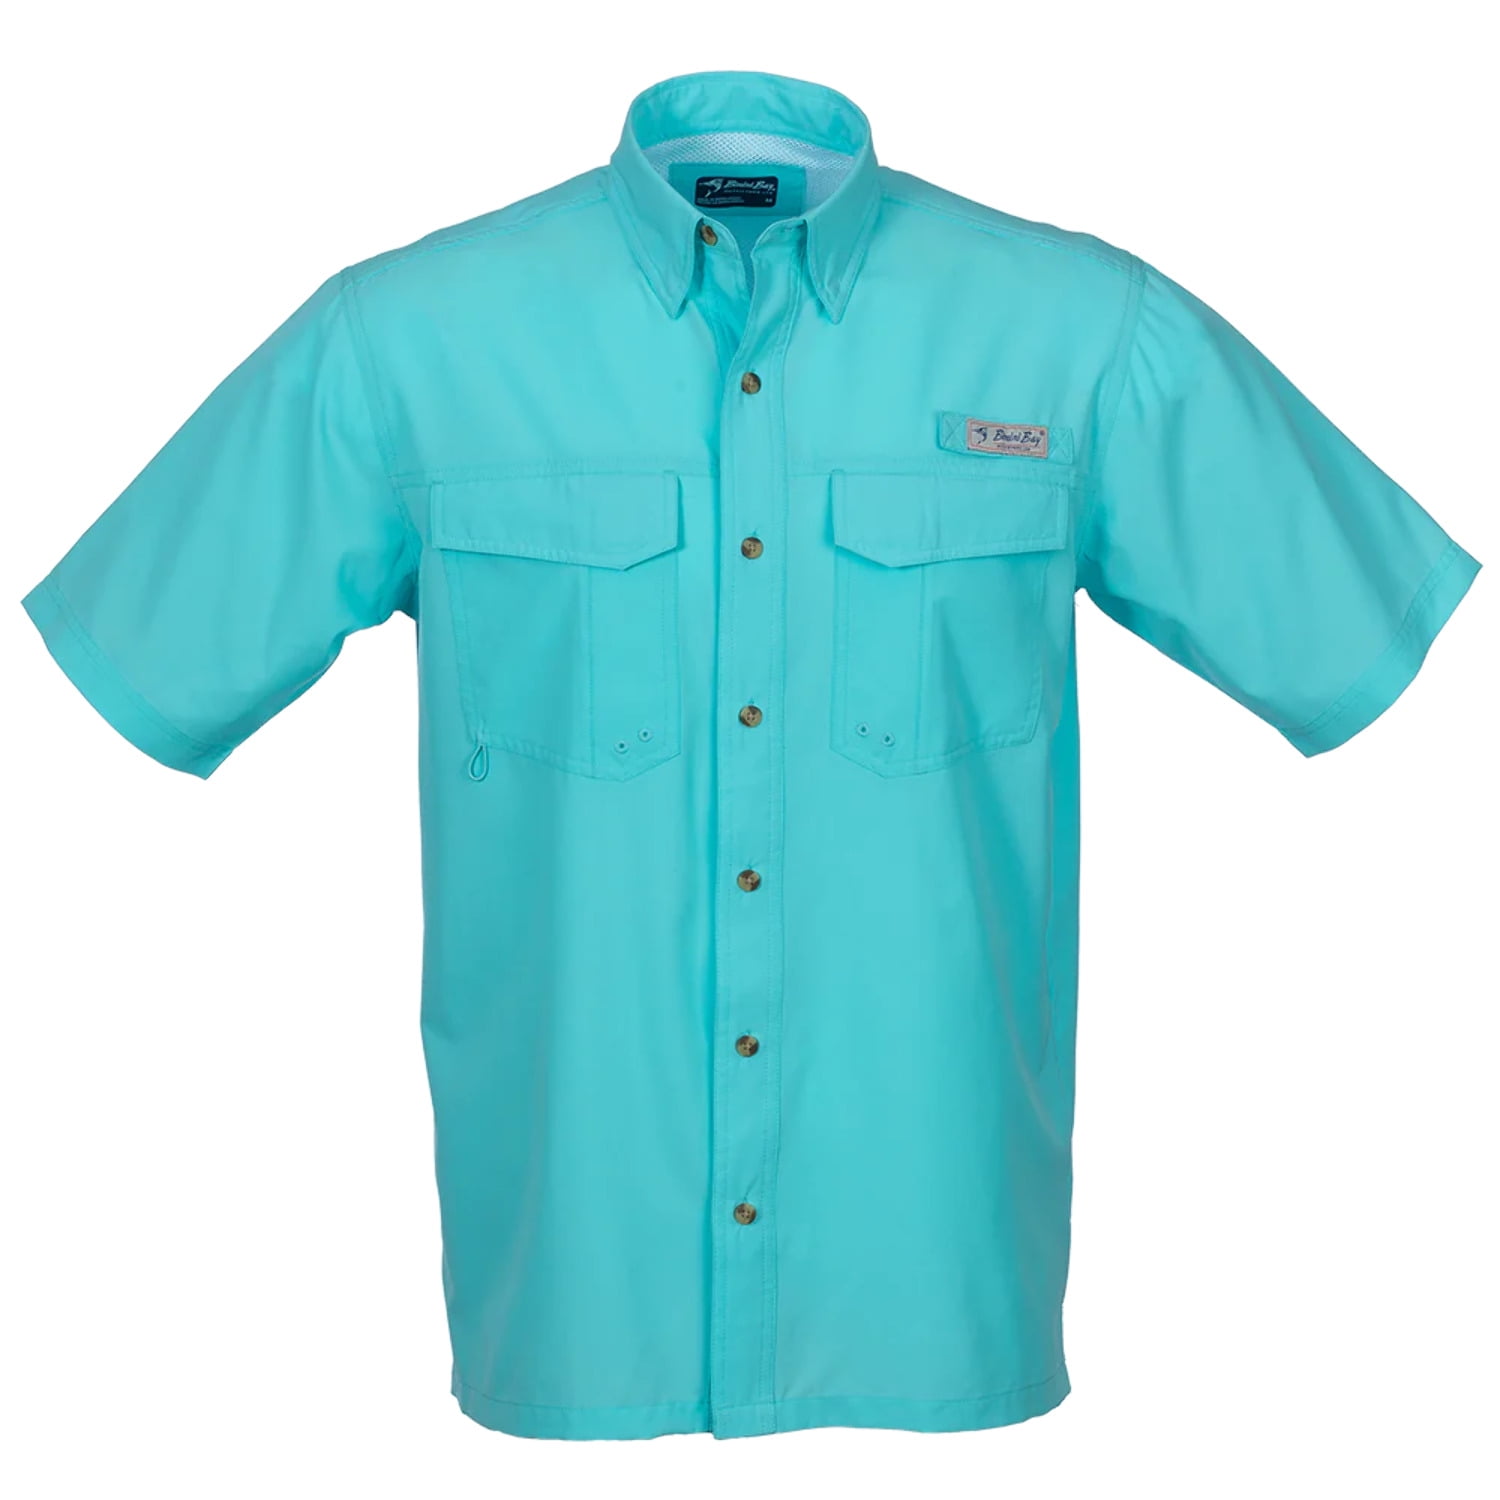 Bimini Bay Outfitters Flats V Men's Short Sleeve Shirt Featuring